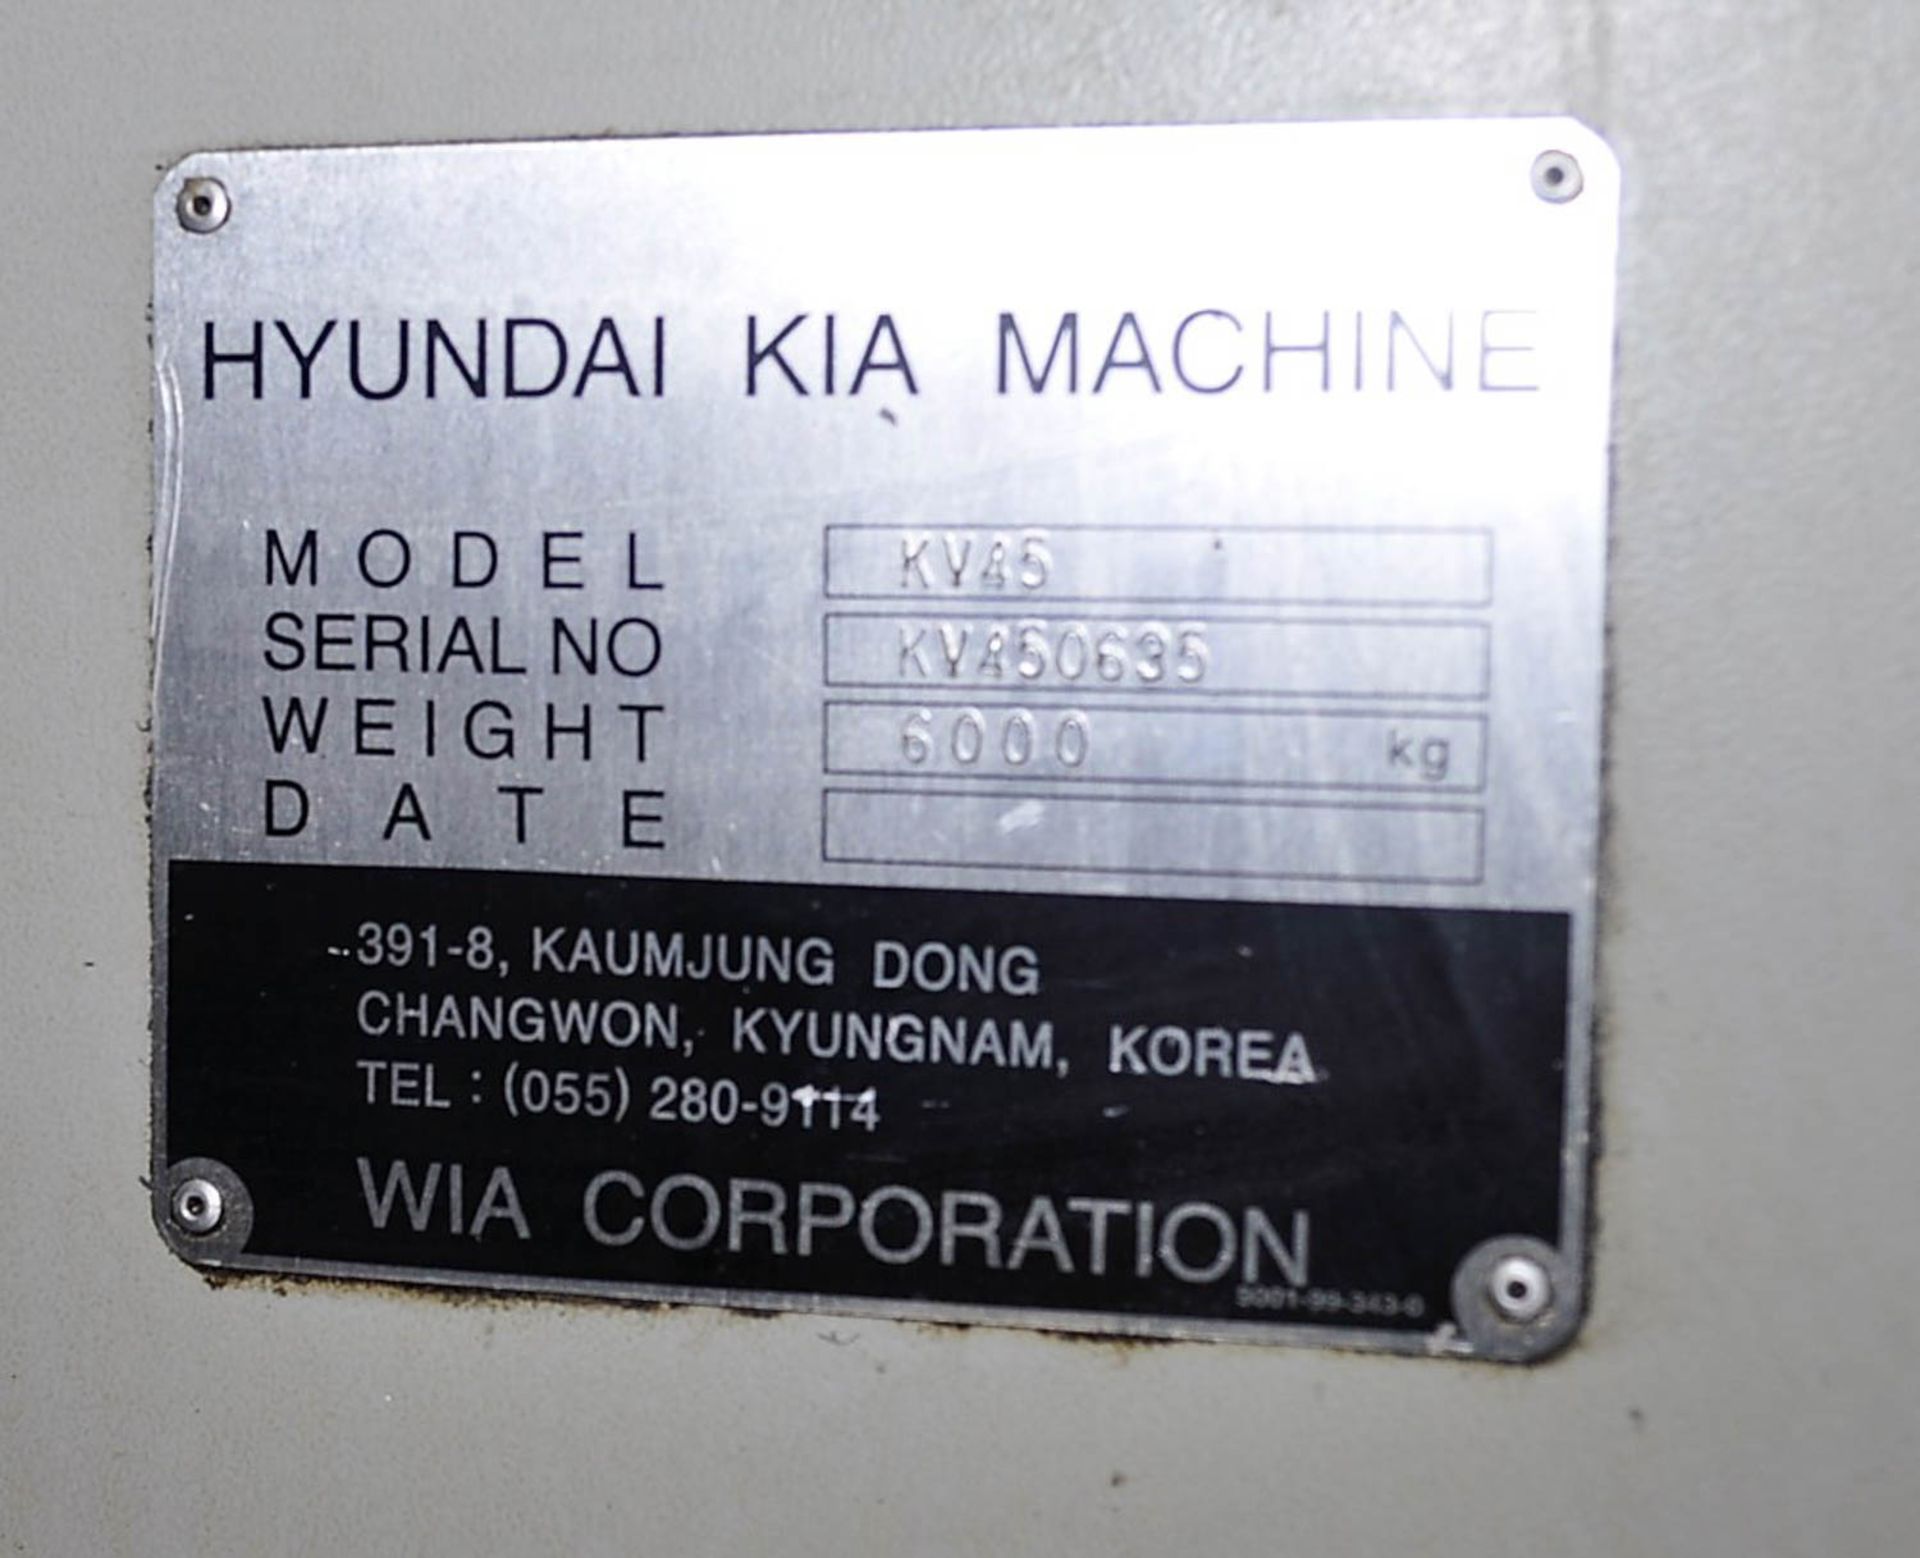 HYUNDAI KIA MDL. KV45 CNC HORIZONTAL MACHINING CENTER, WITH FANUC 0iMC CNC CONTROL, TRAVELS: X-31. - Image 8 of 8